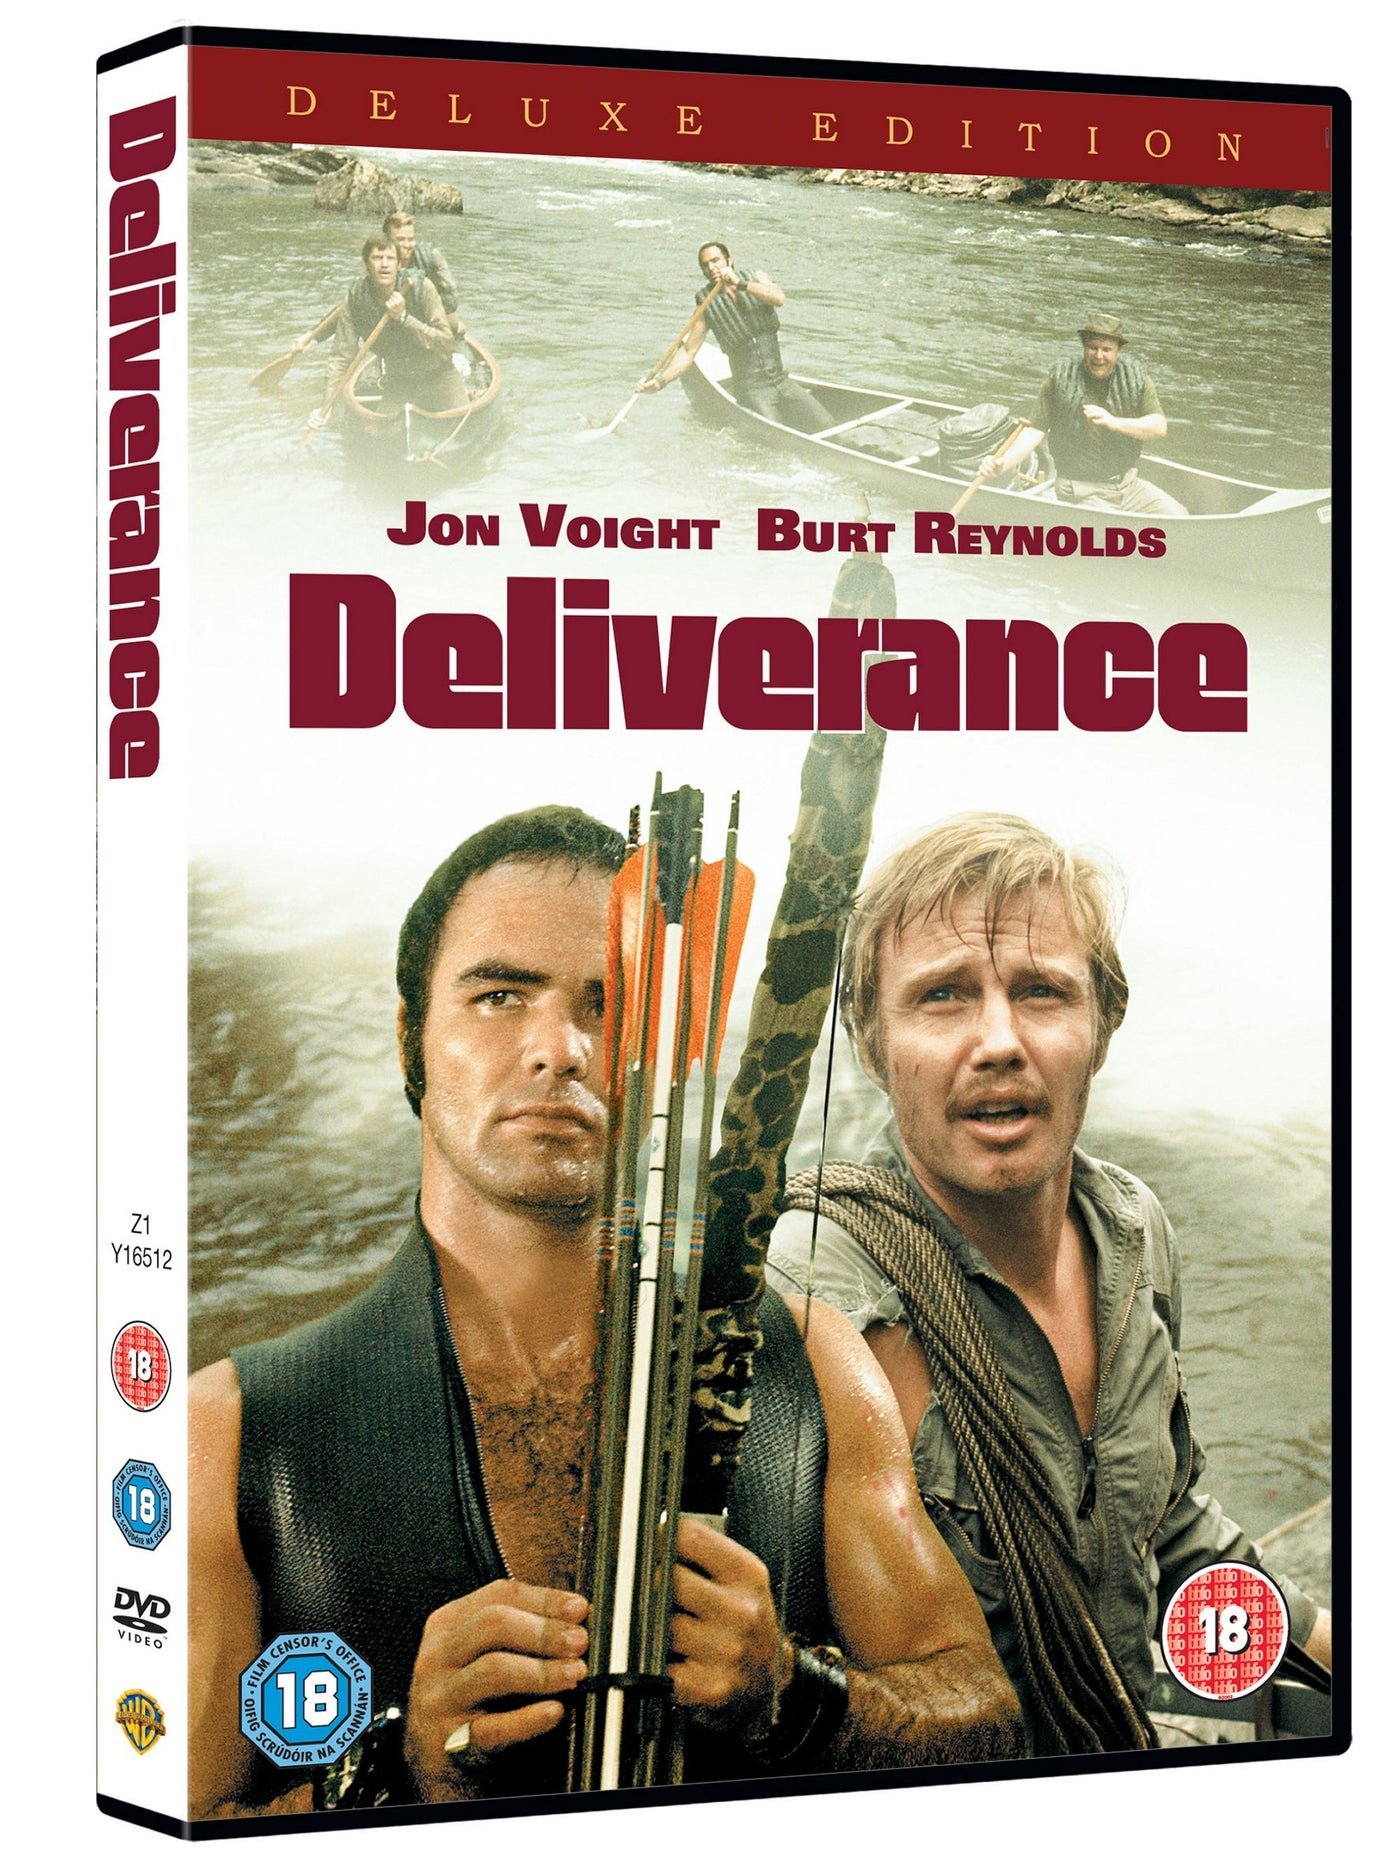 DELIVERANCE35THANNIV(DE/DVD/S)